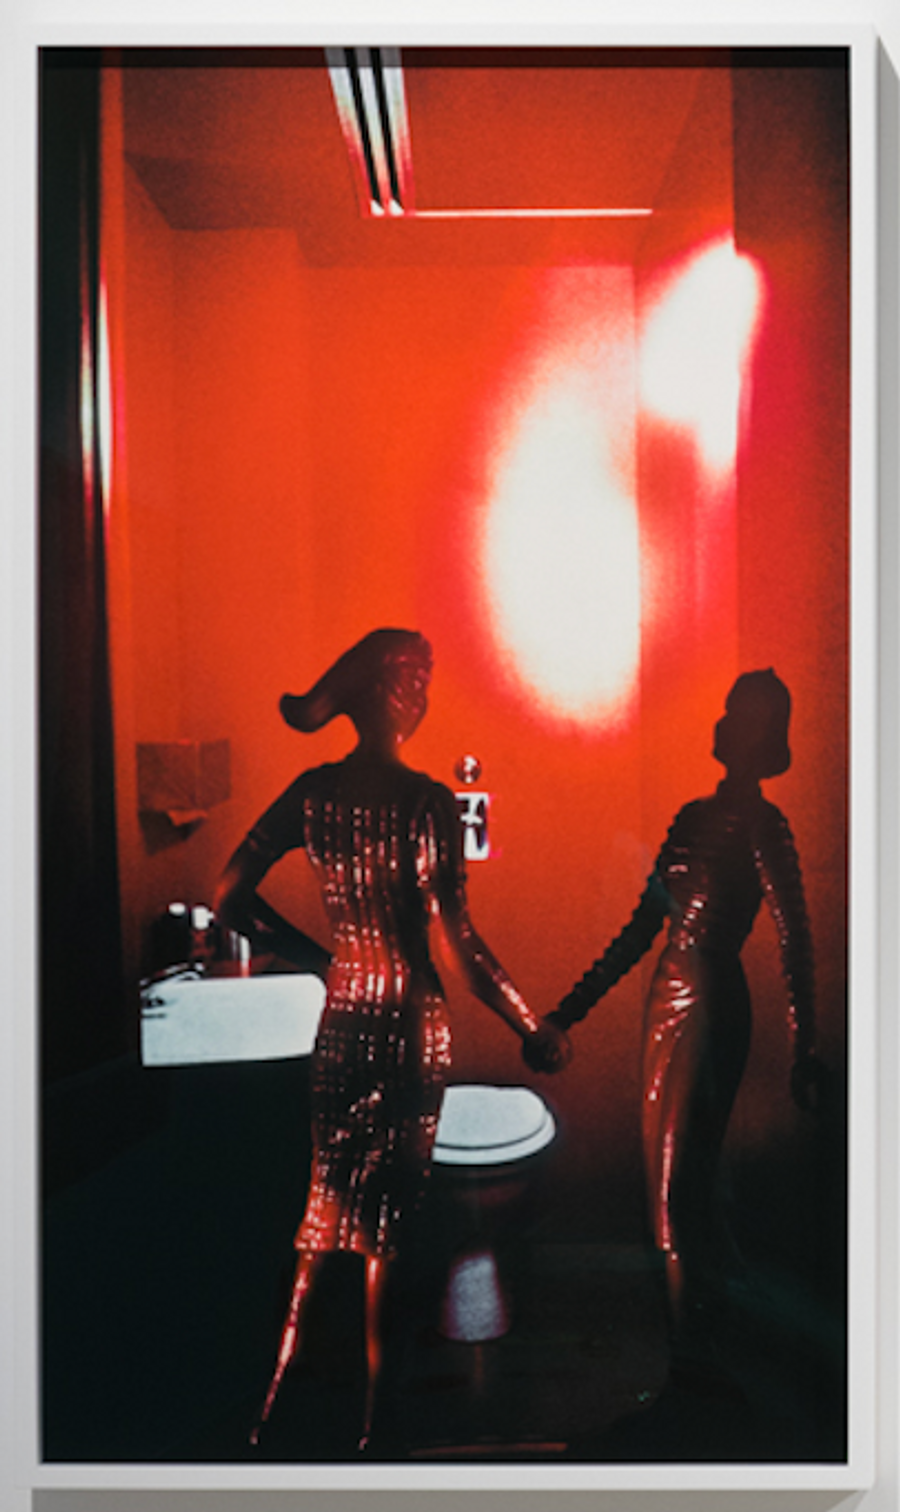 Red Bathroom